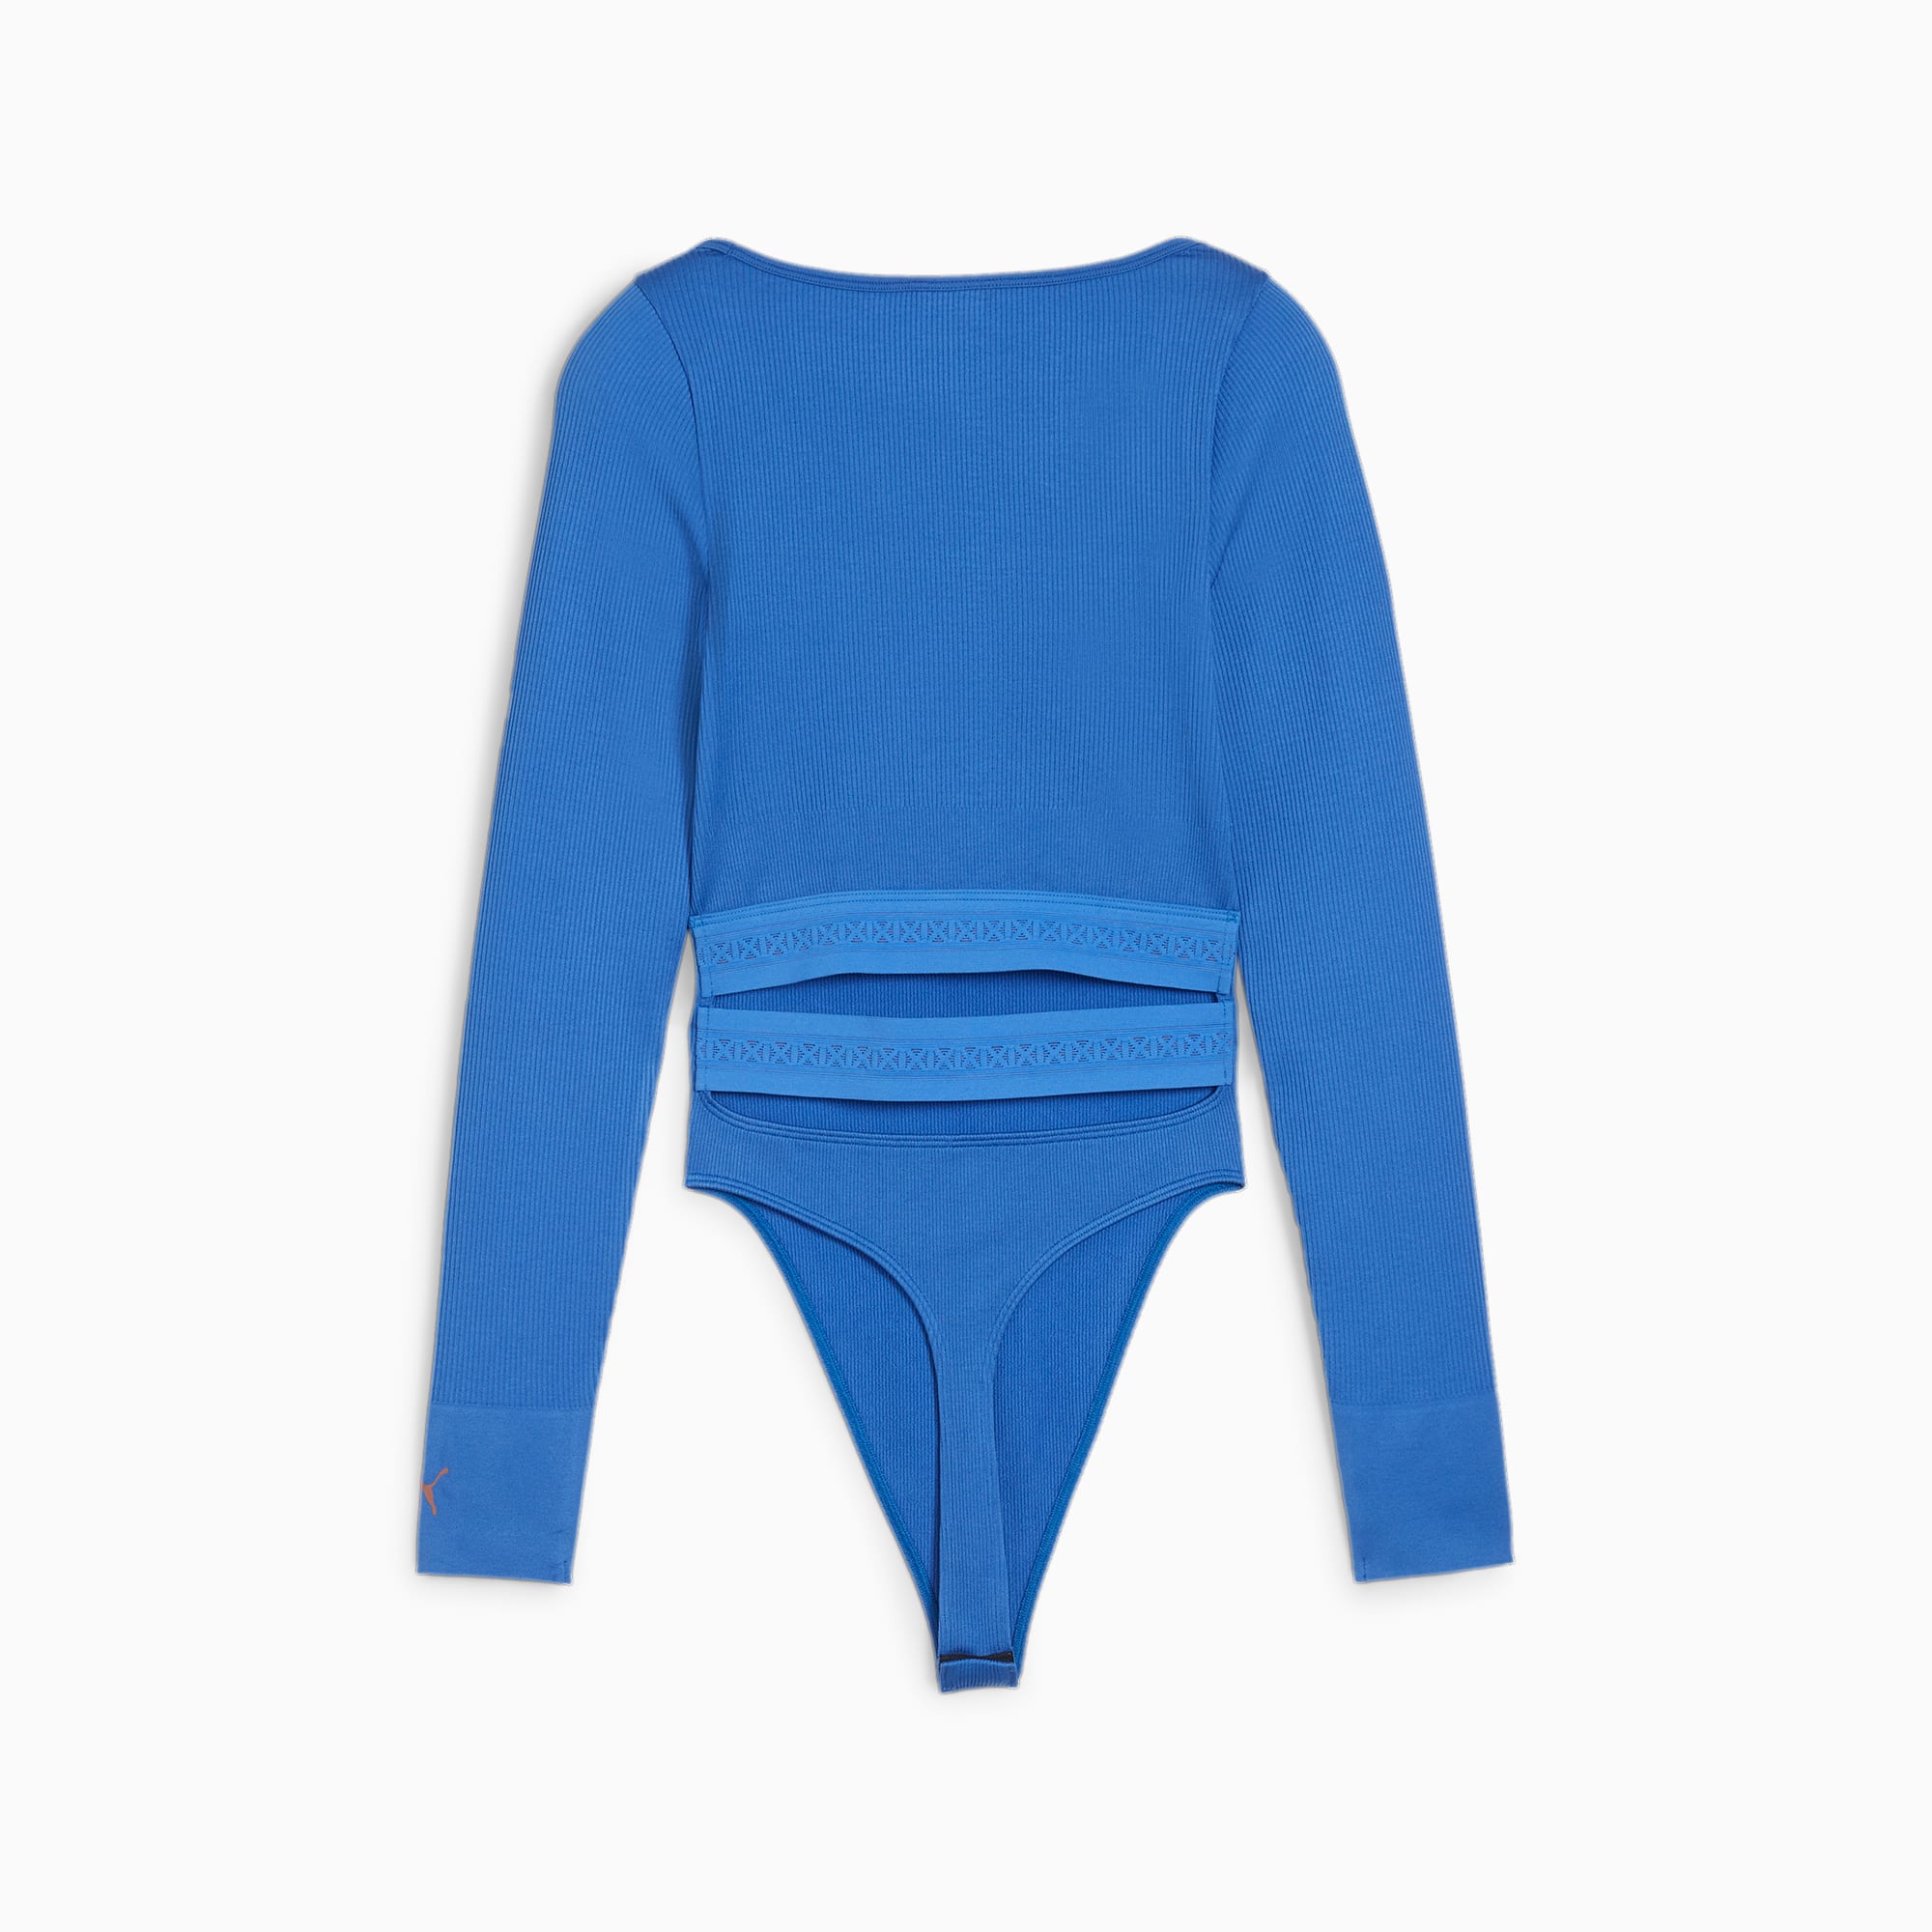 PUMA X Pamela Reif Women's Ribbed Bodysuit, Bluevender, Size XL, Clothing